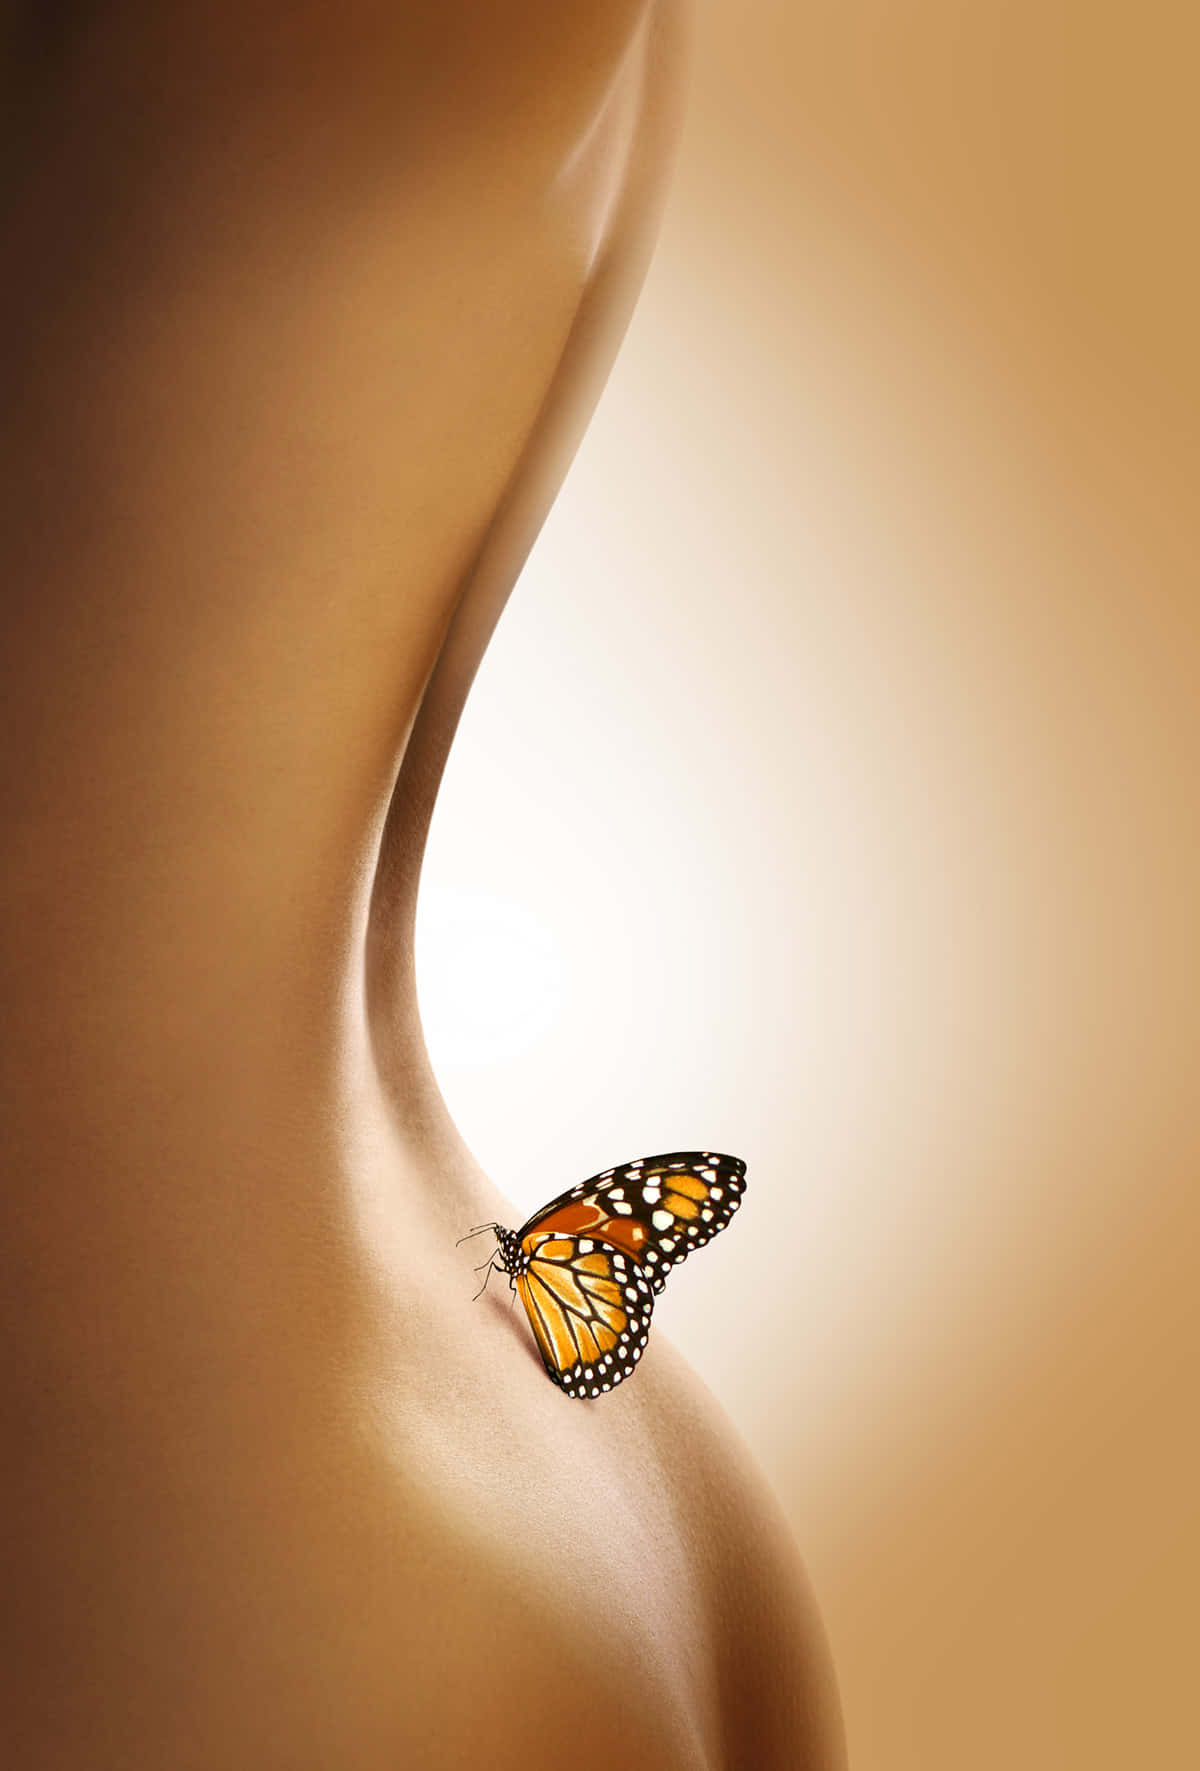 Sexykörper Schmetterling Wallpaper